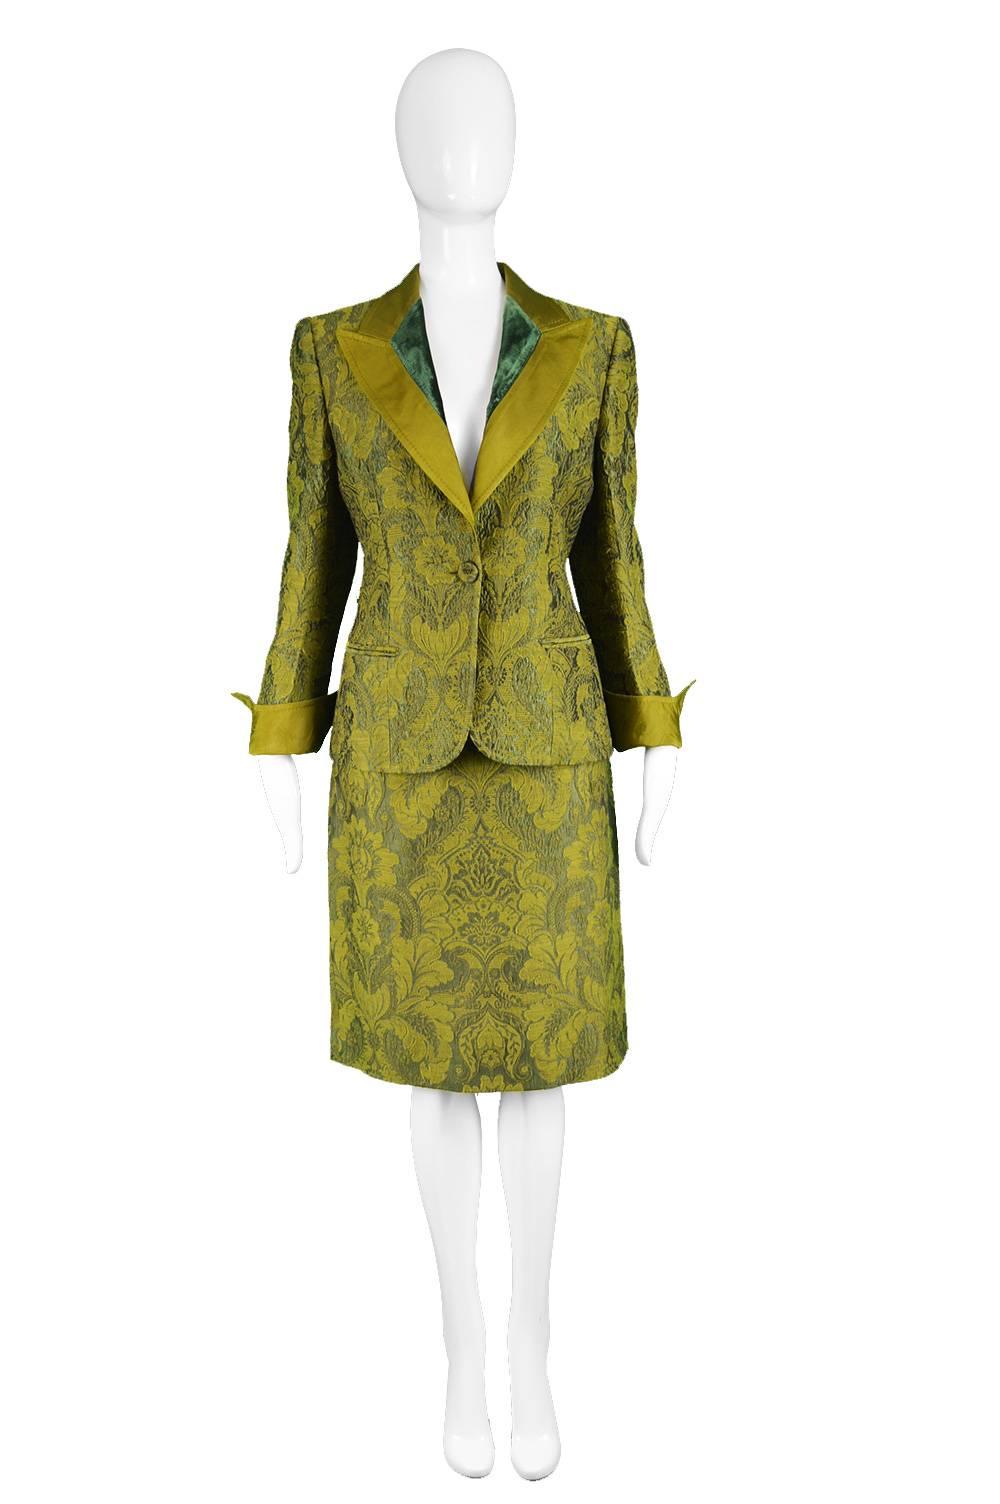 Gianfranco Ferré Vintage 1990s Green Brocade, Velvet & Grosgrain Skirt Set

Estimated Size: UK 10/ US 6/ EU 38. Please check measurements. 
Jacket
Bust - 36” / 91cm (allow a couple of inches room for movement)
Waist - 32” / 81cm 
Length (Shoulder to